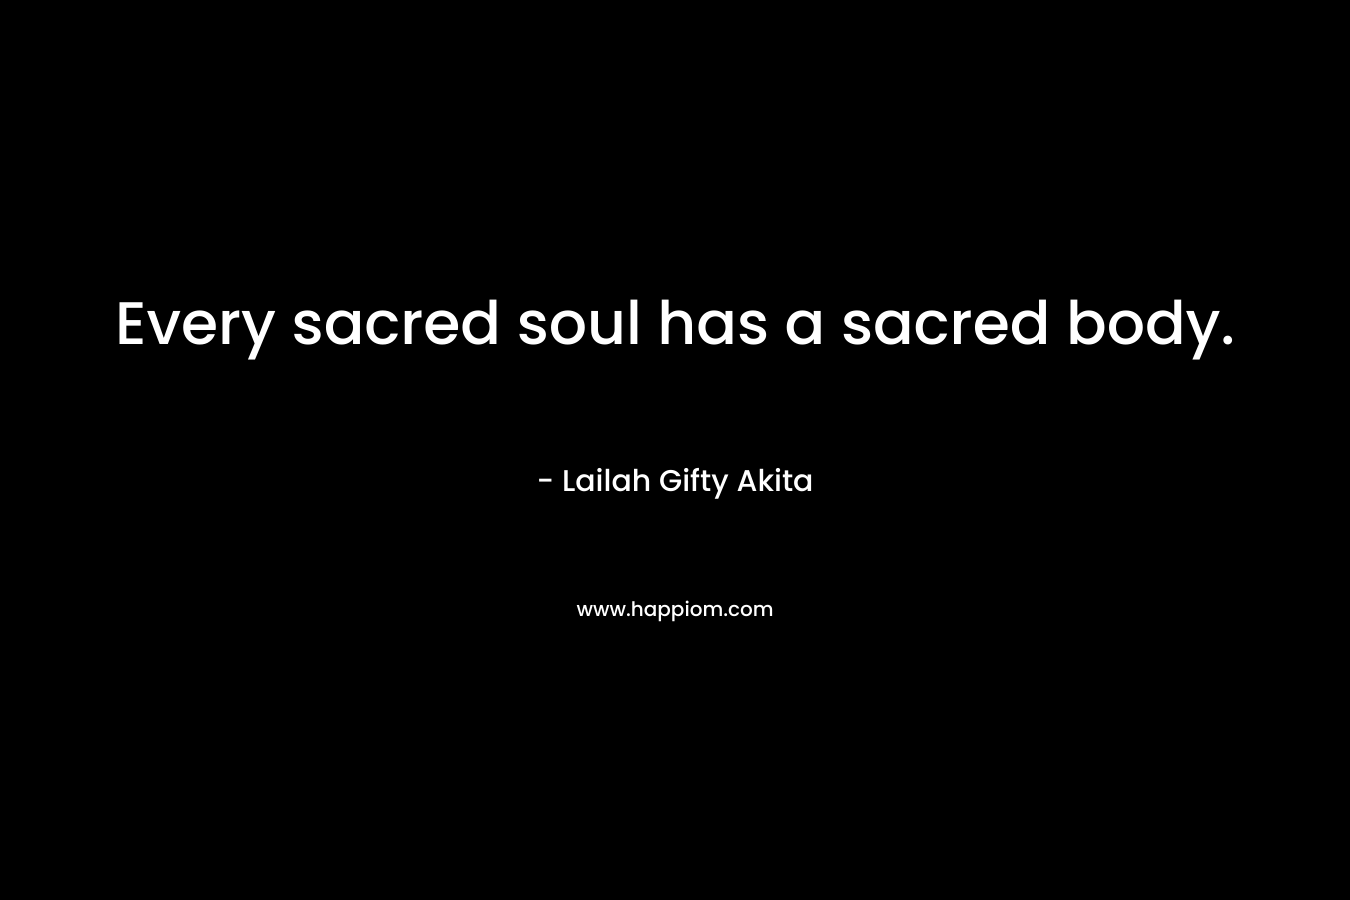 Every sacred soul has a sacred body.